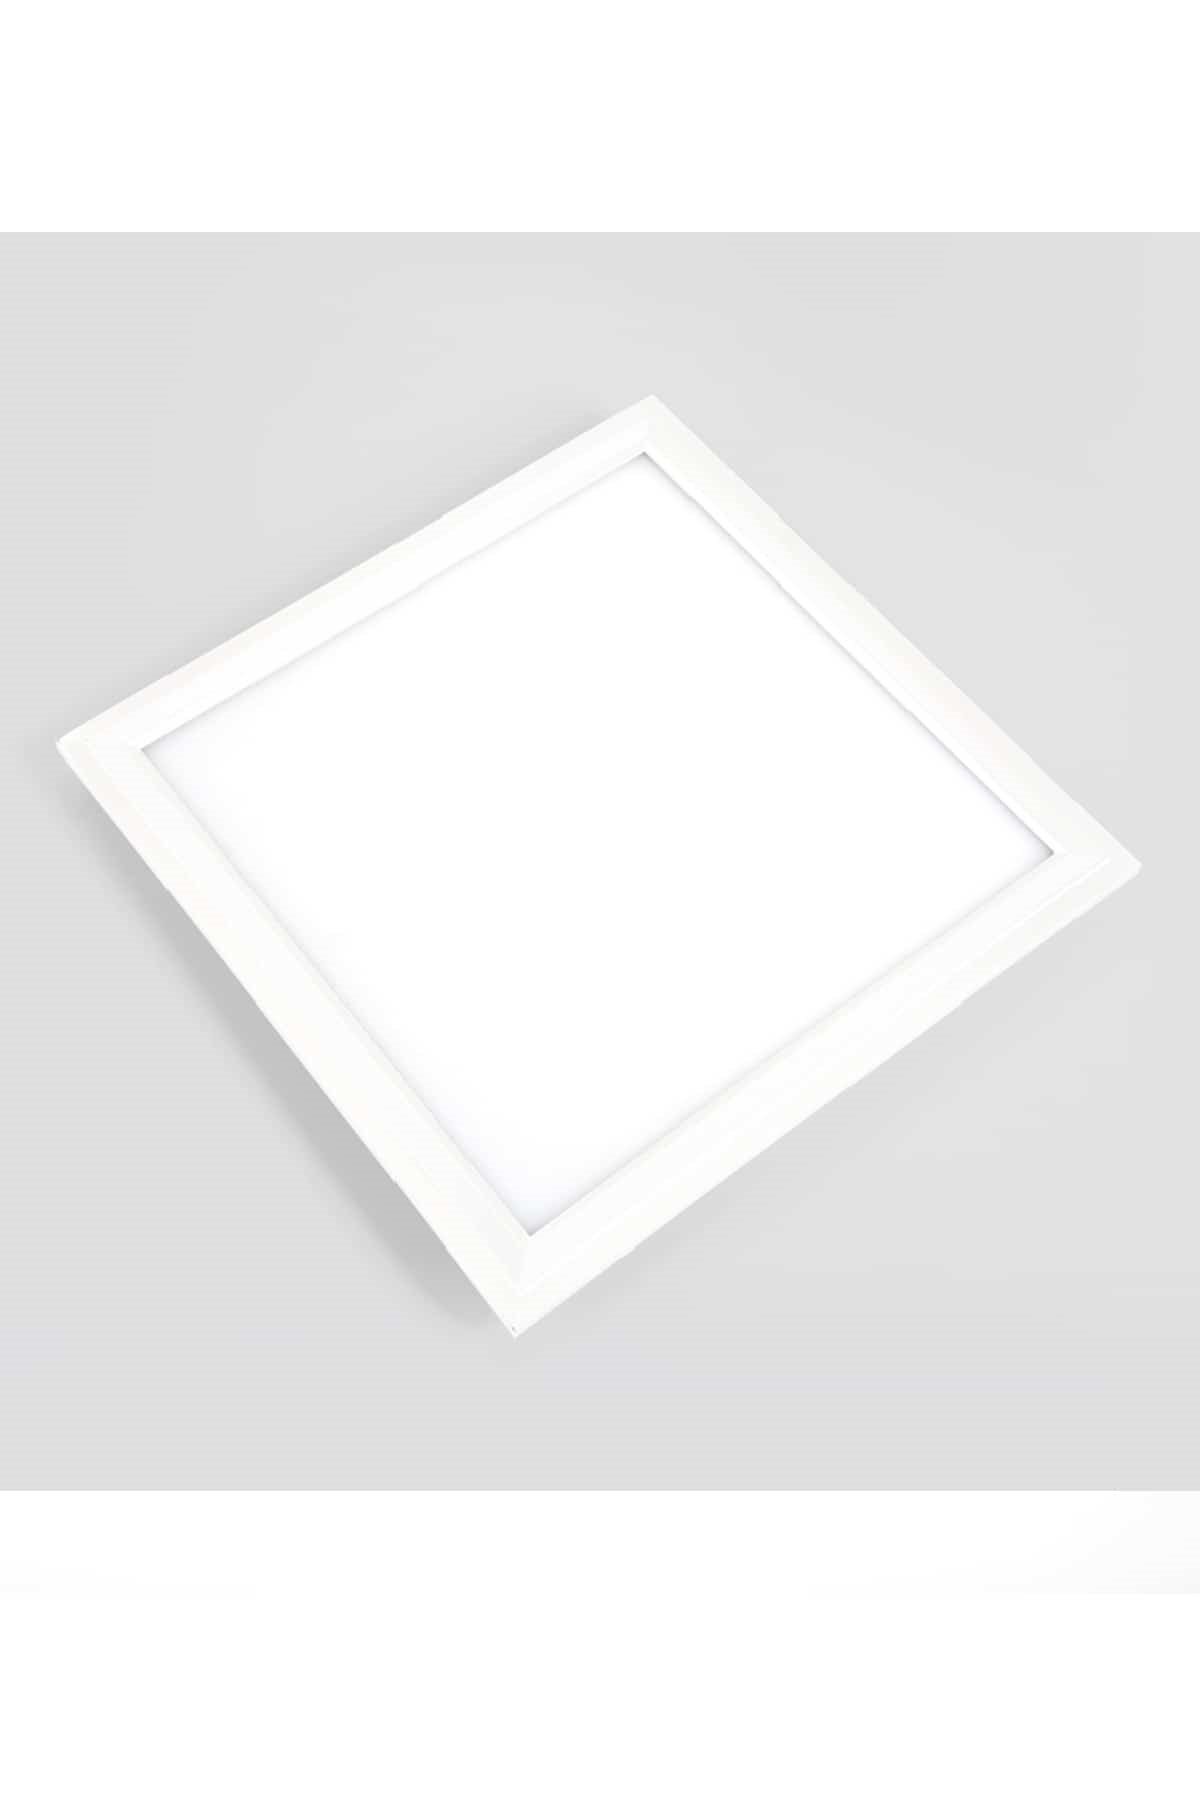 Cata CT 5286 25W 30x30 Klipin Tavan Led Panel Sıva Altı Beyaz 6400K |  Aydınlatmacım